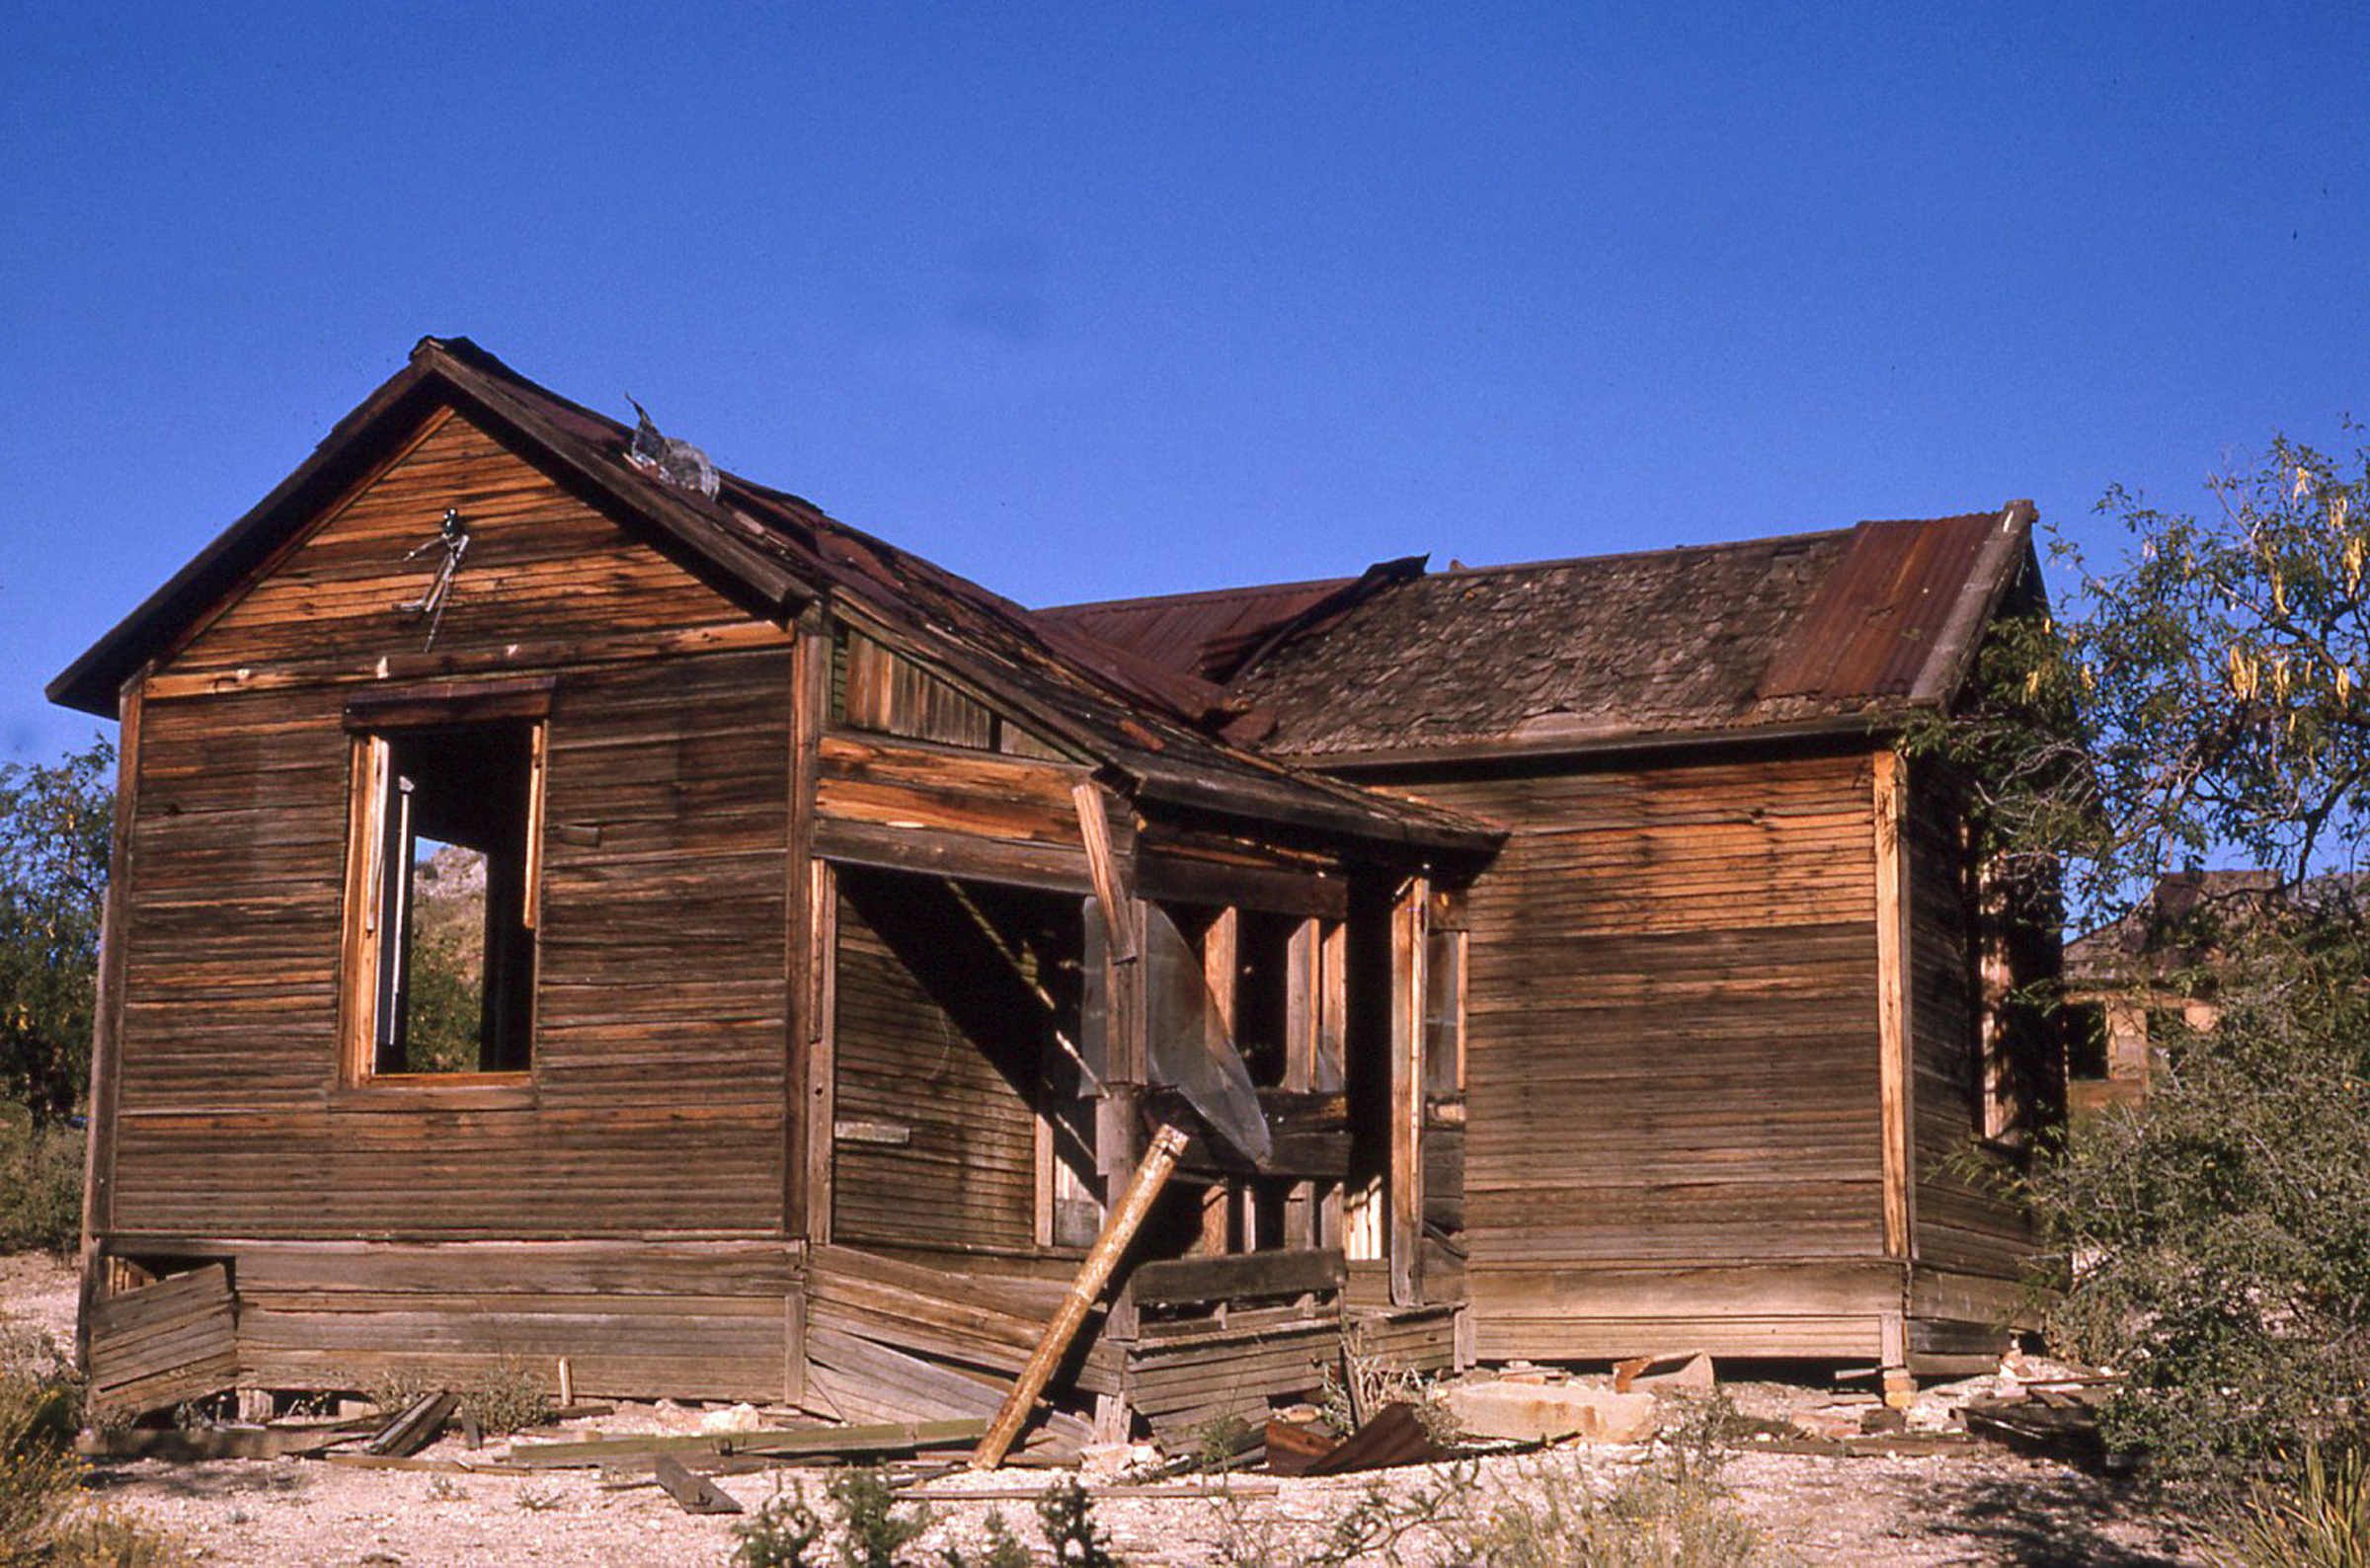 Abandoned mining camp in Helvetia, Arizona (J. Rasmussen)